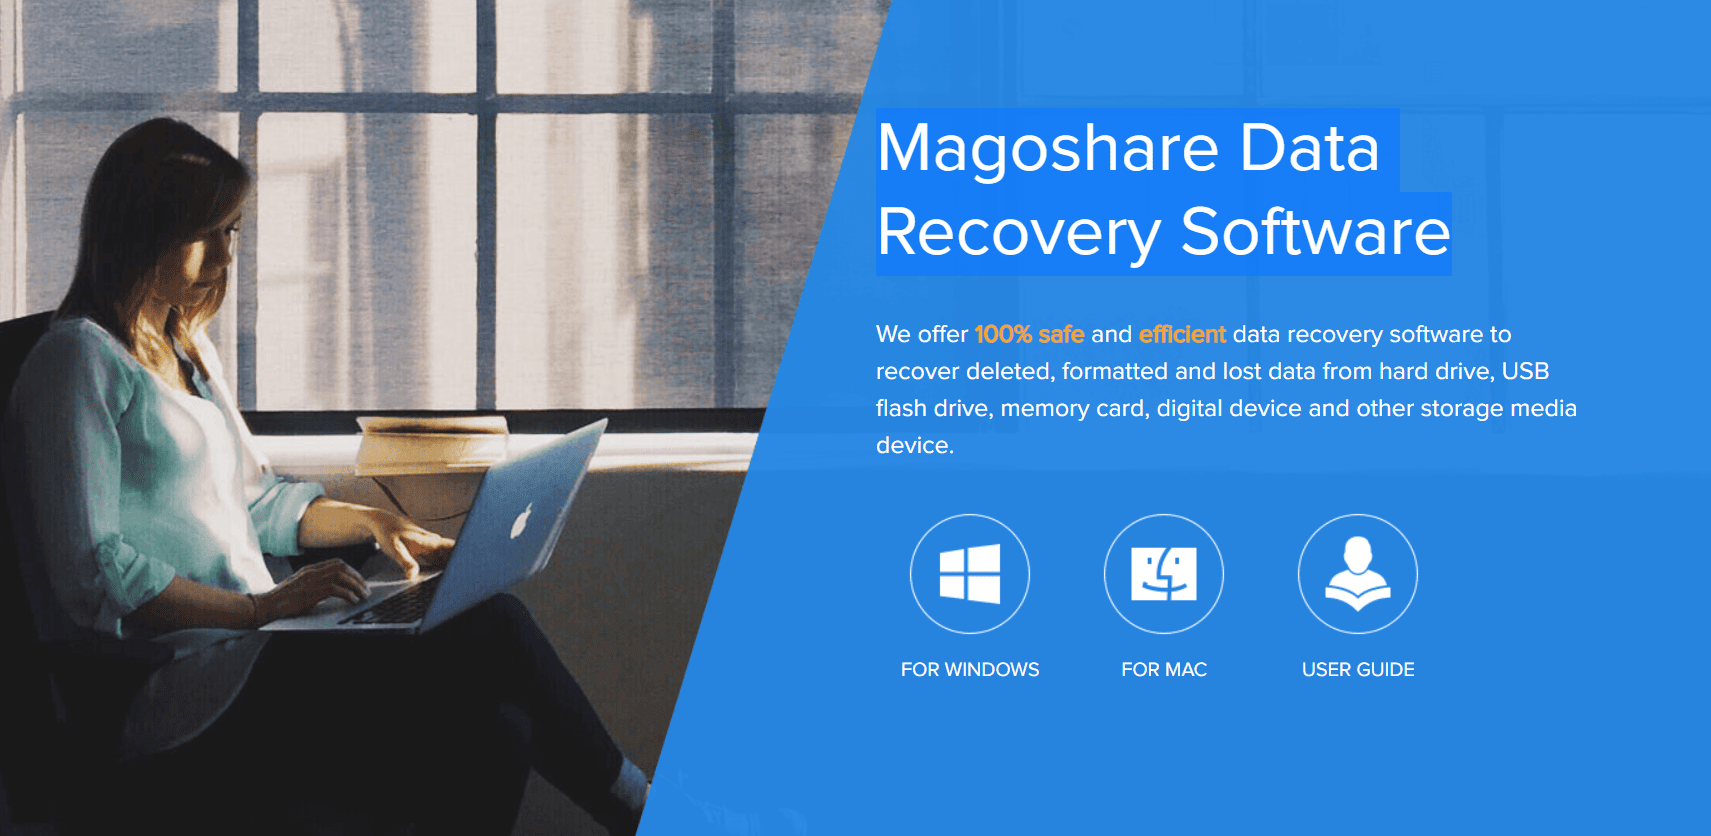 Magoshare Data Recovery Software